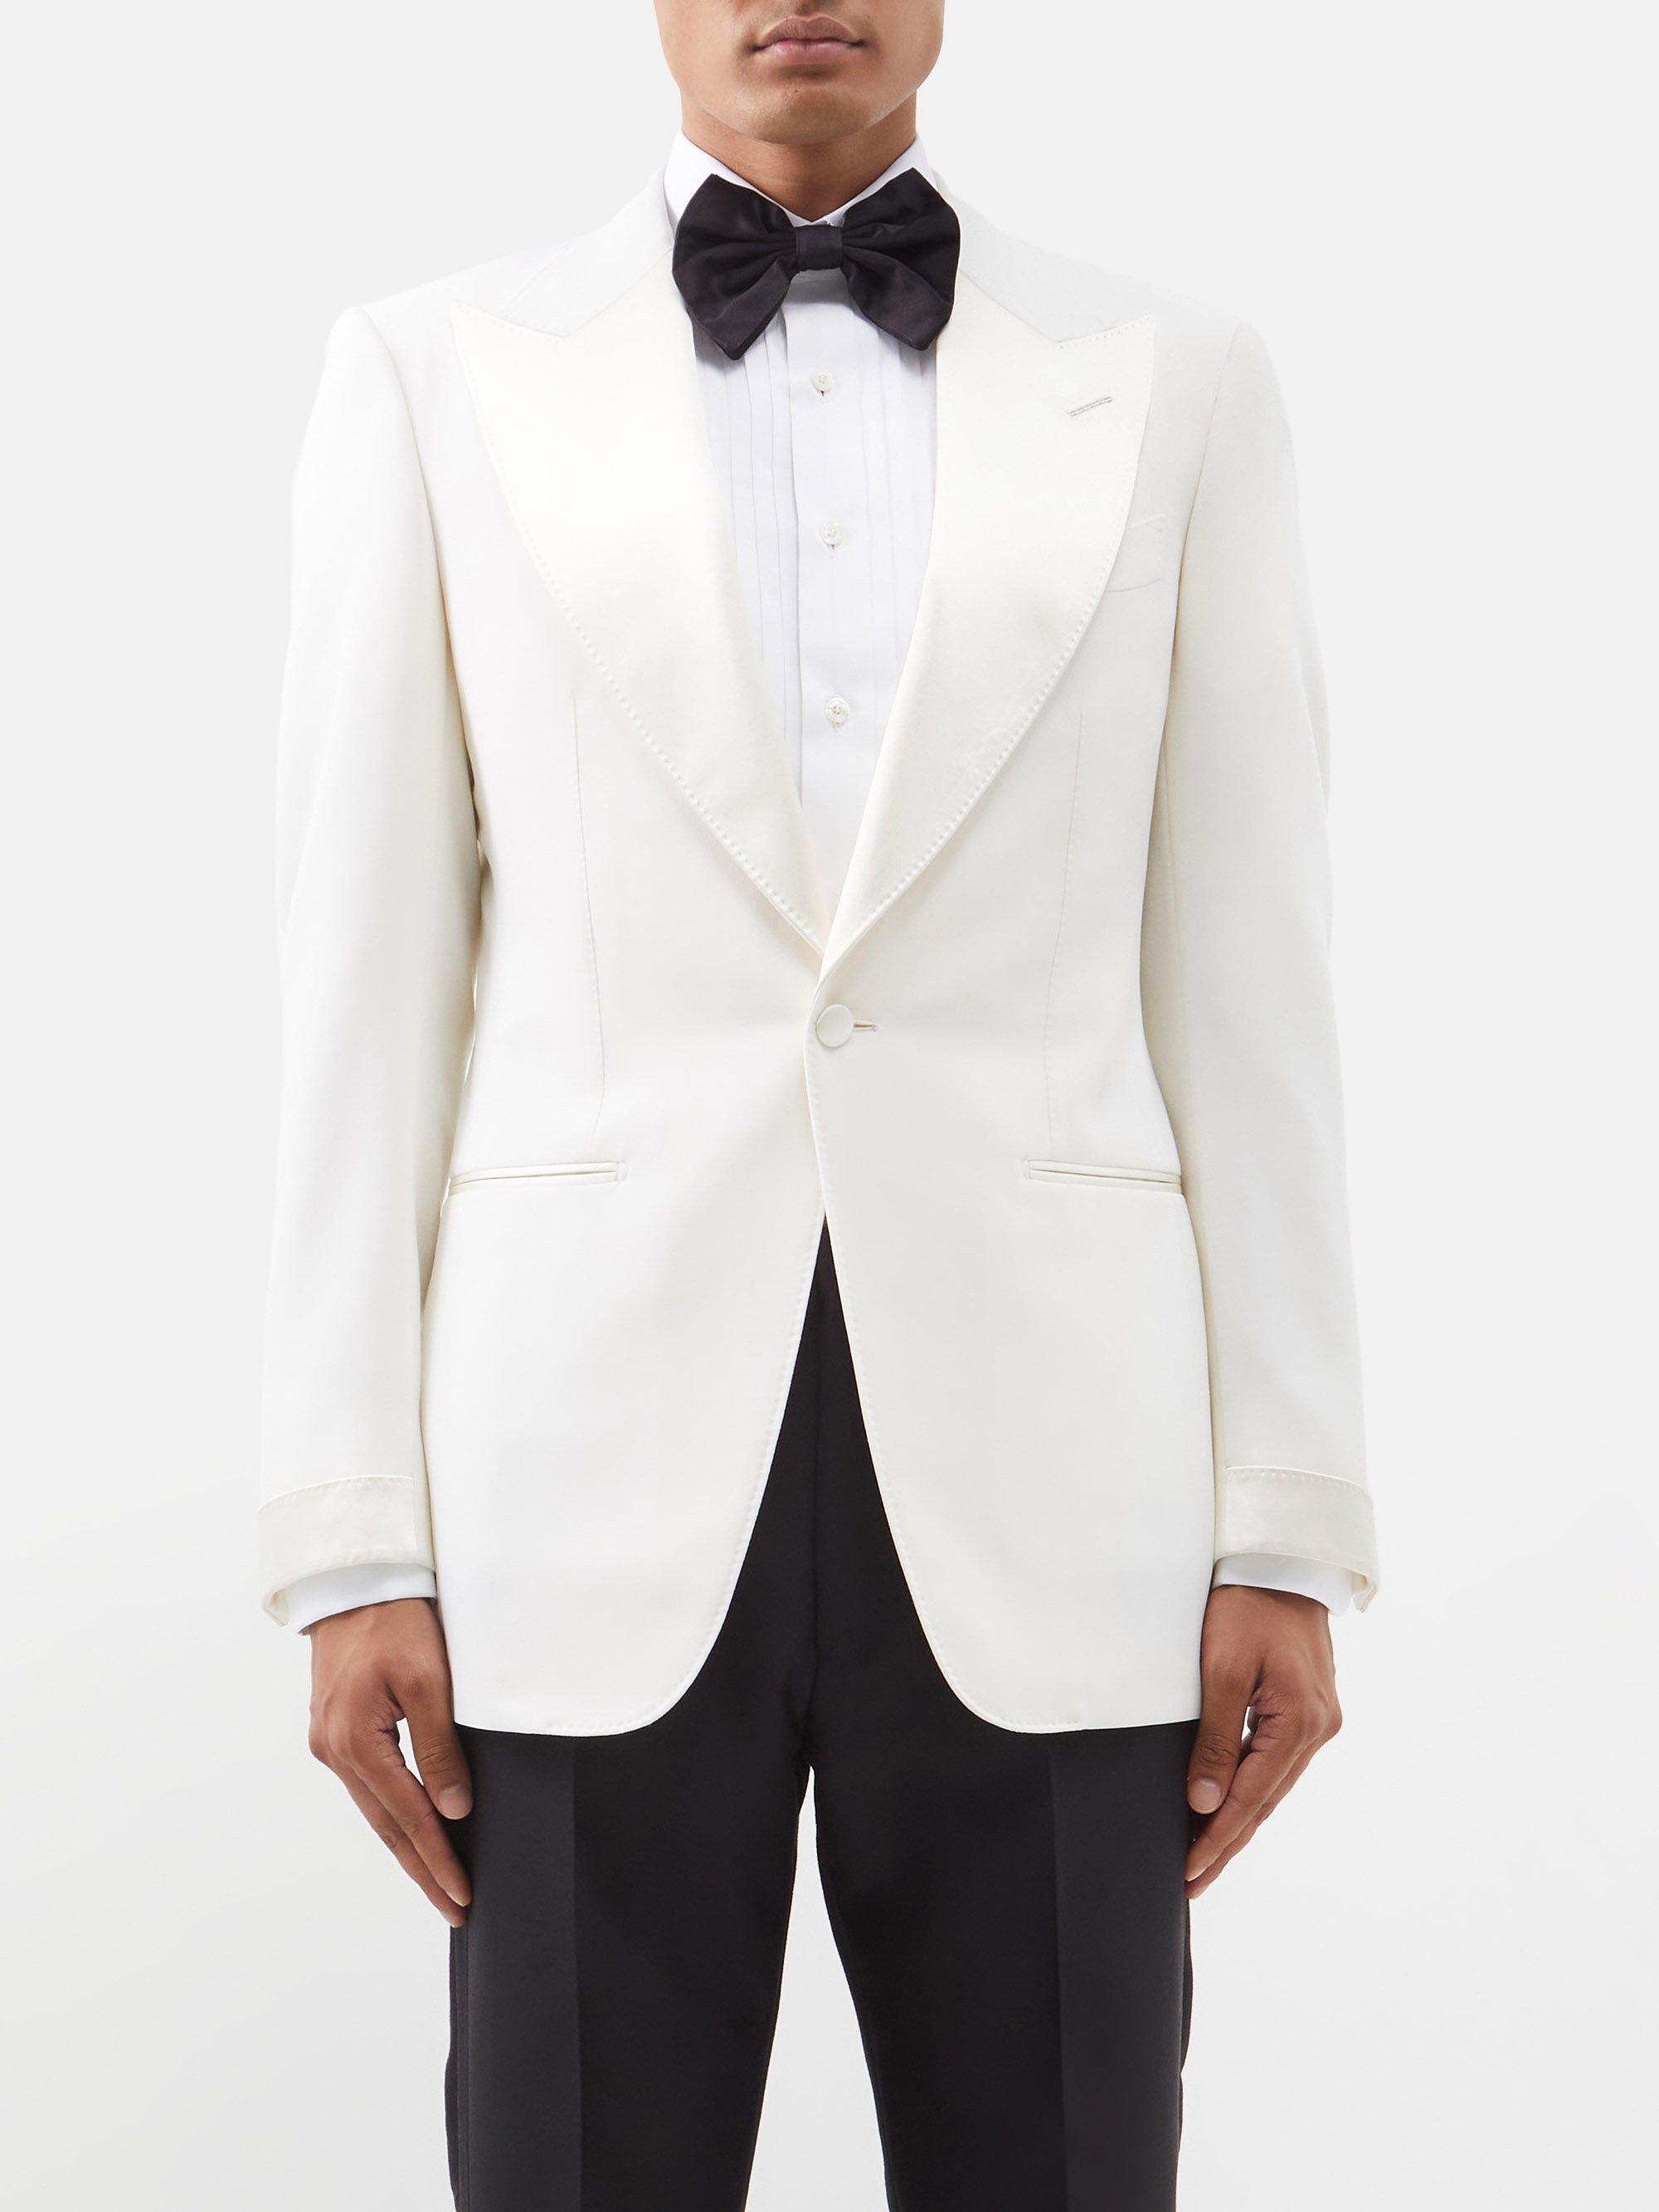 Tom Ford Atticus Satin-lapel Tuxedo Jacket in White for